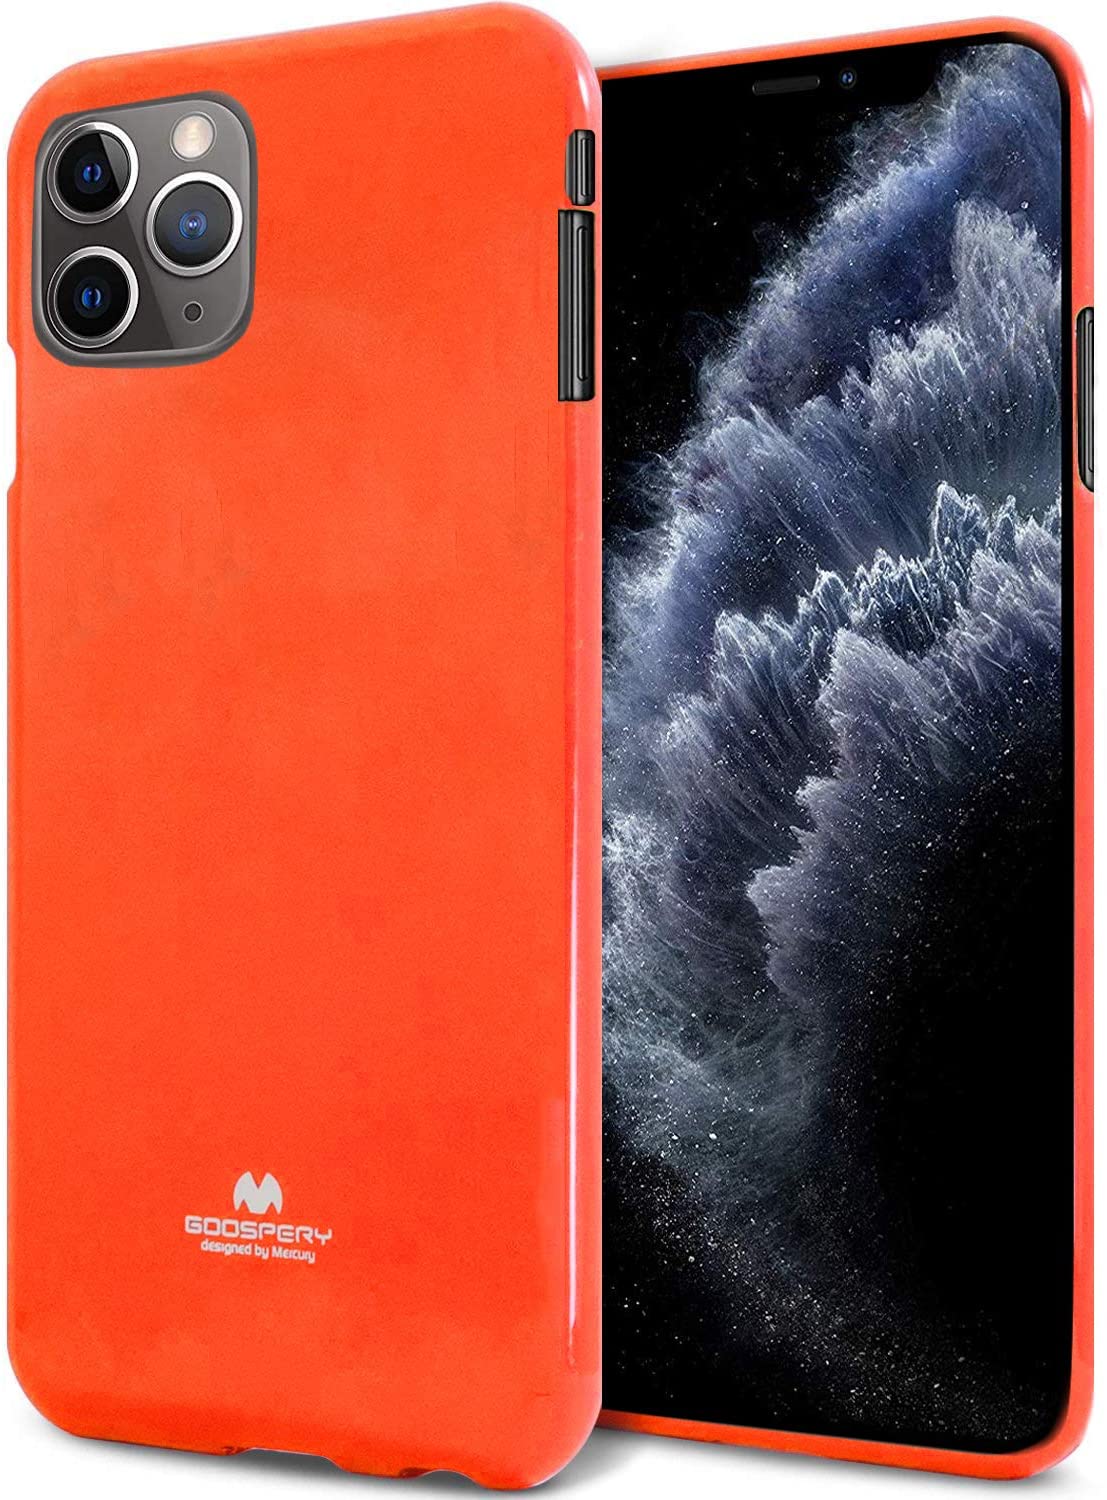 Ochranný kryt pro iPhone XS / X - Mercury, Fluorscence Jelly Orange